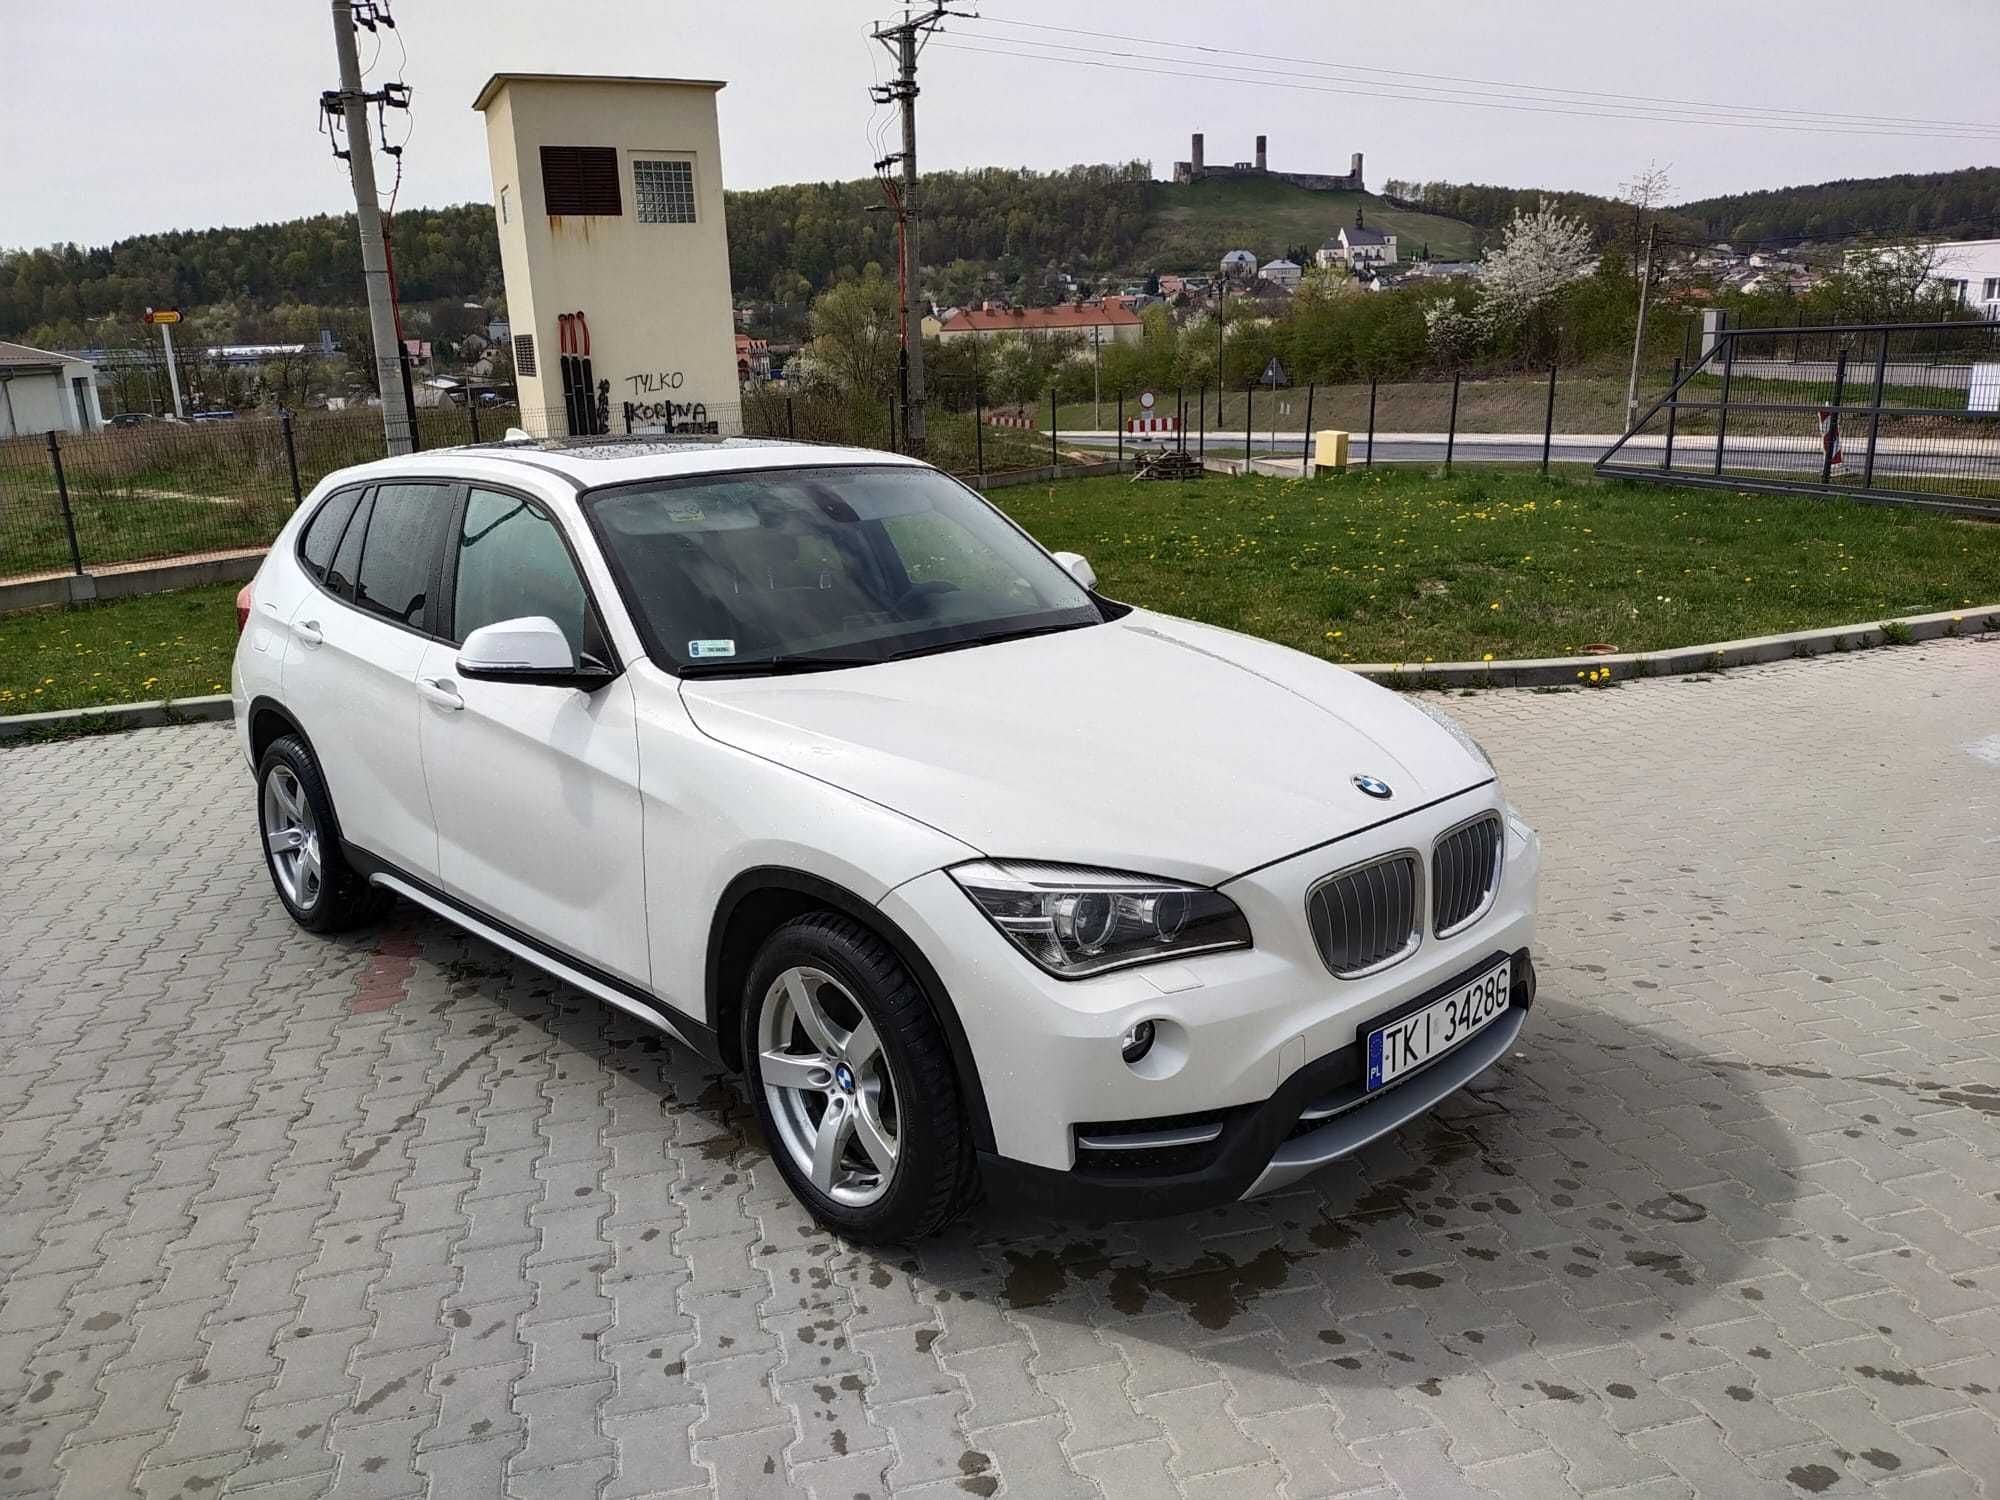 BMW X1, 2013, bixenon, panorama dach, biała perła